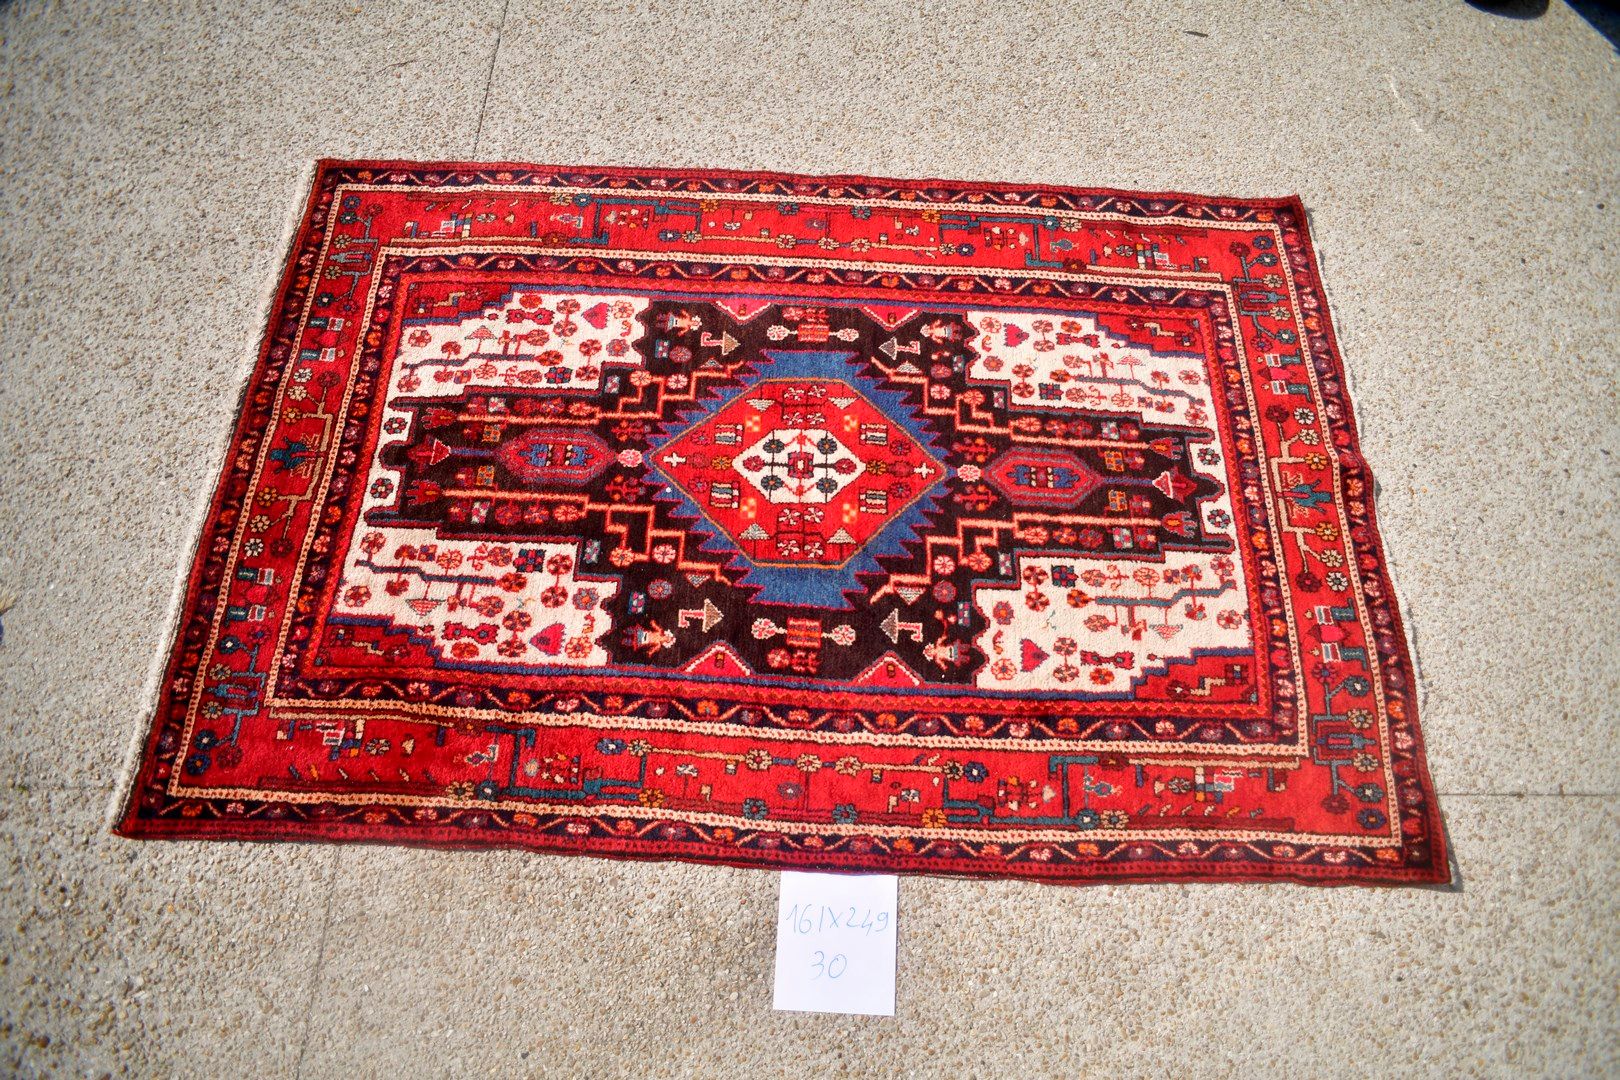 Null 纳哈万（伊朗），1980年。

羊毛天鹅绒，棉质基础。

象牙色的场地上有一个非常大的午夜蓝色十字星形徽章。

状况良好。

249 x 161 cm